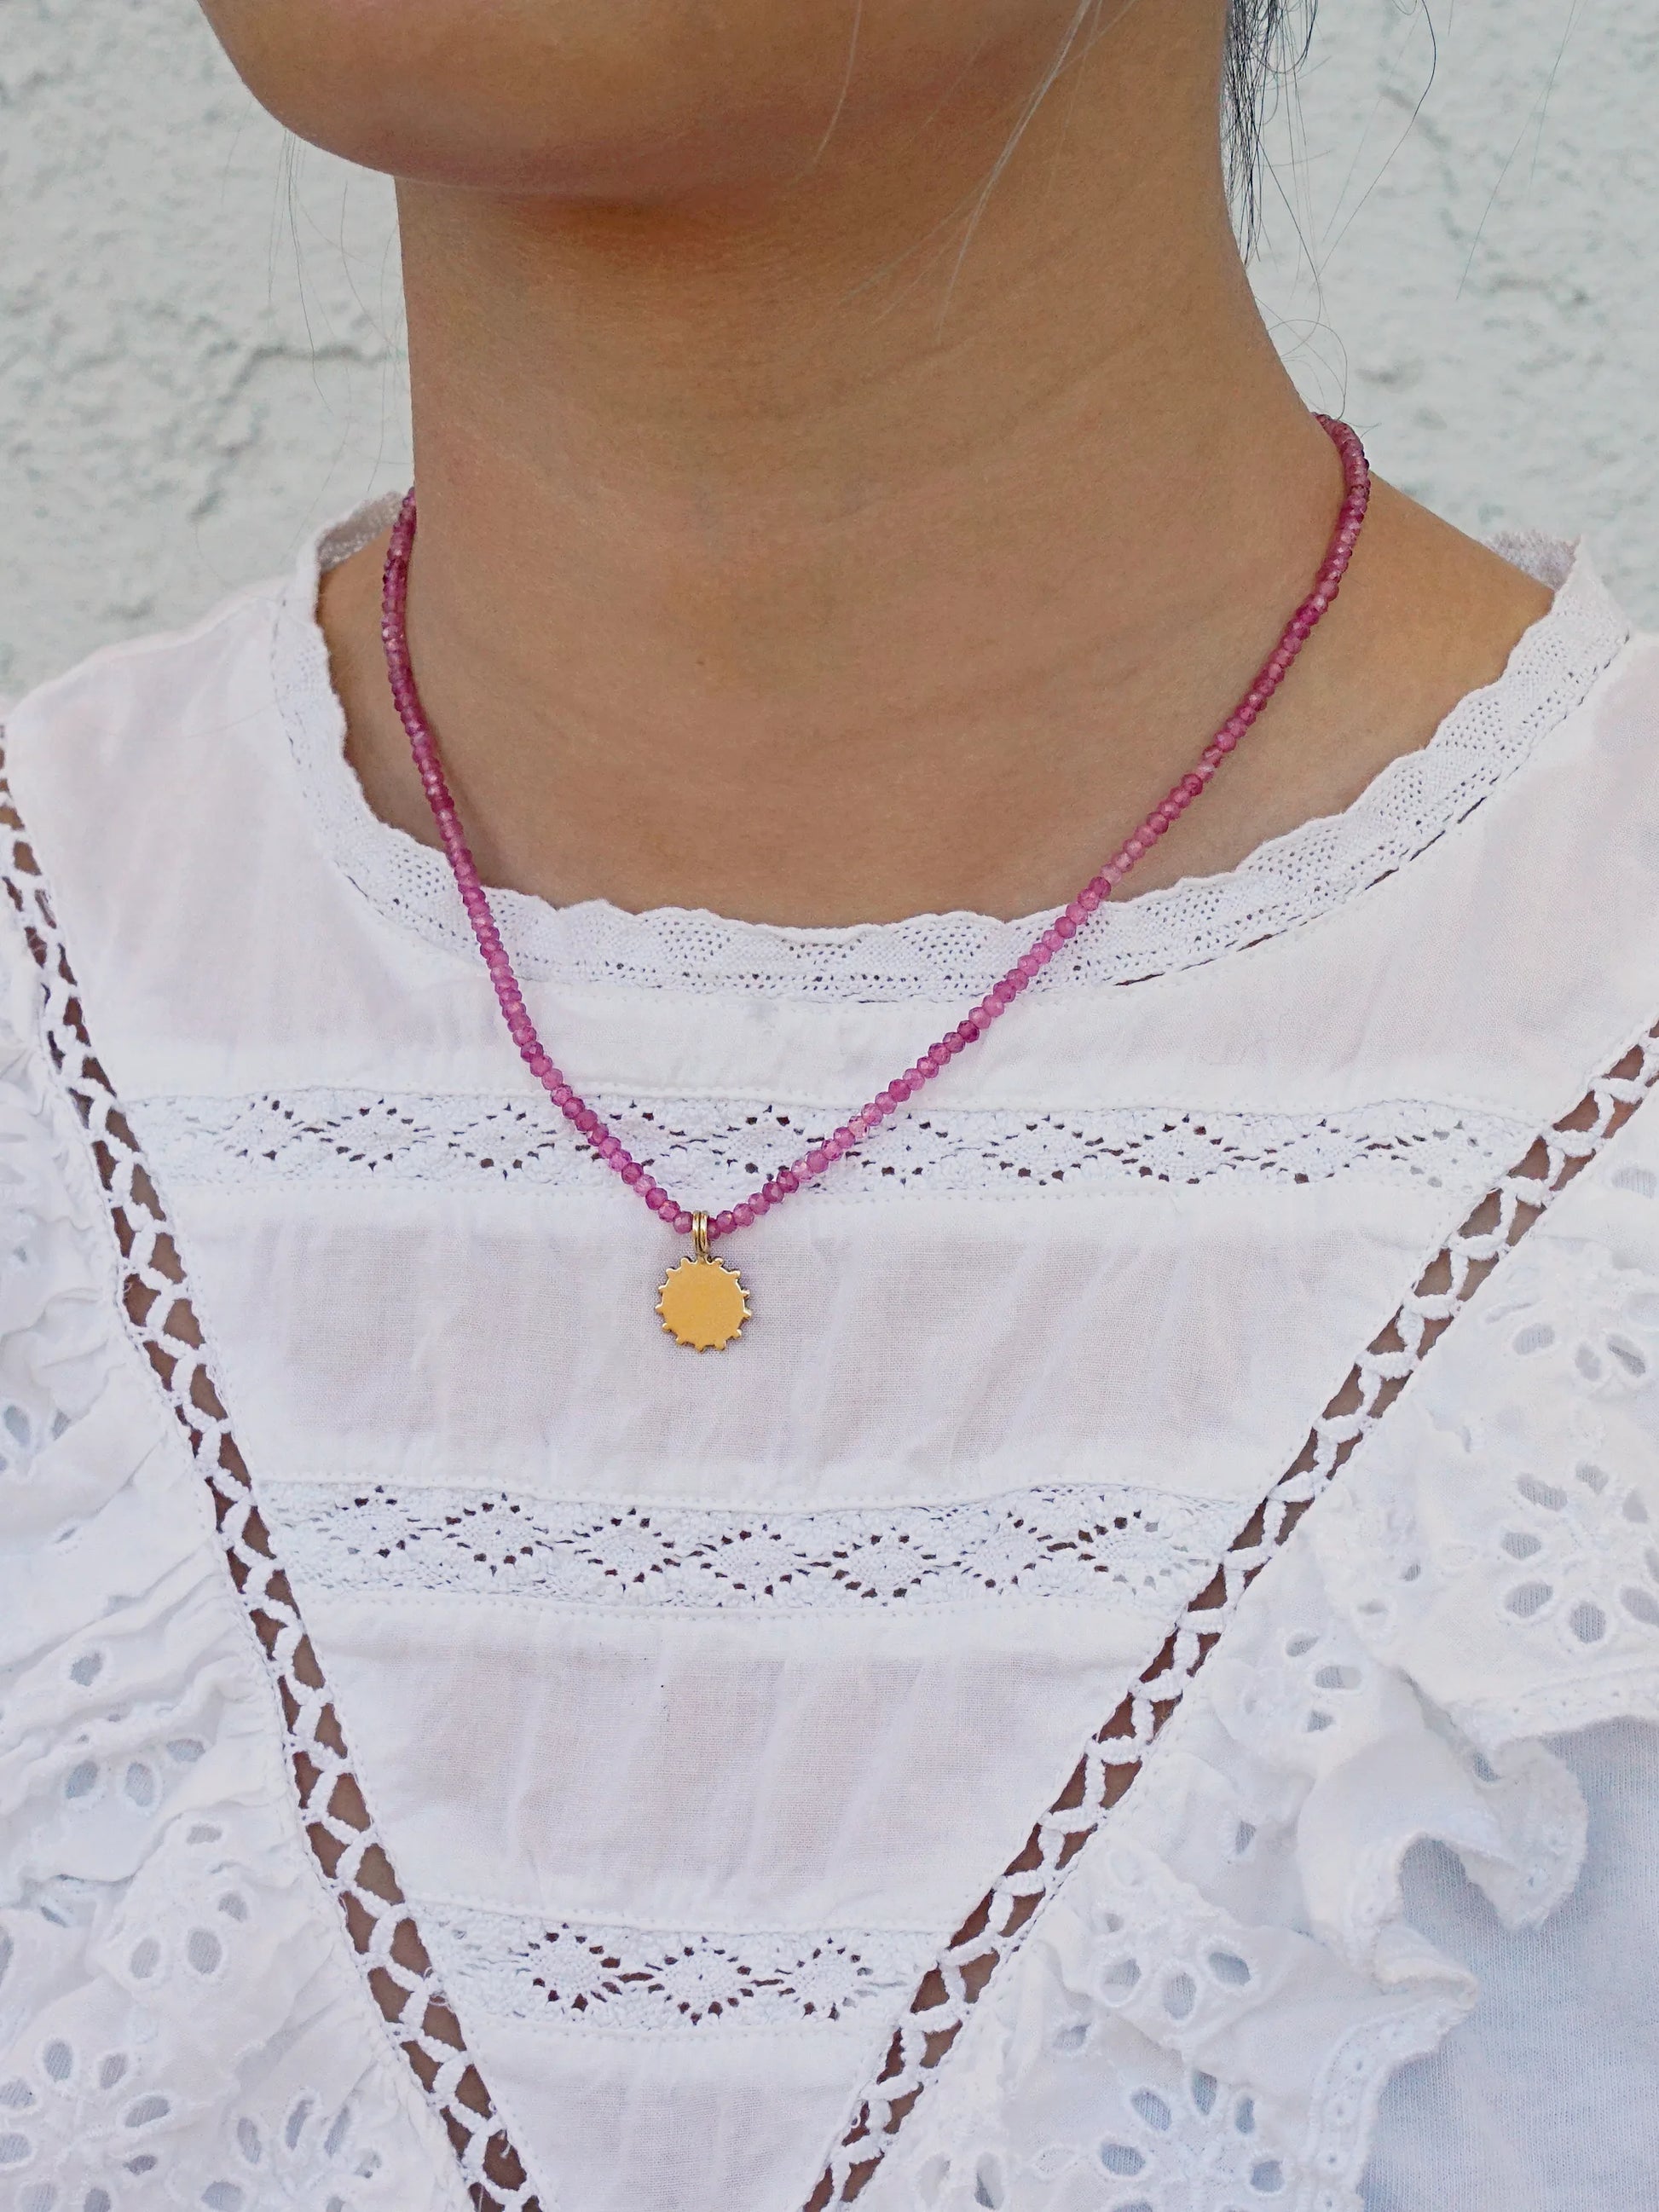 pink tourmaline necklace